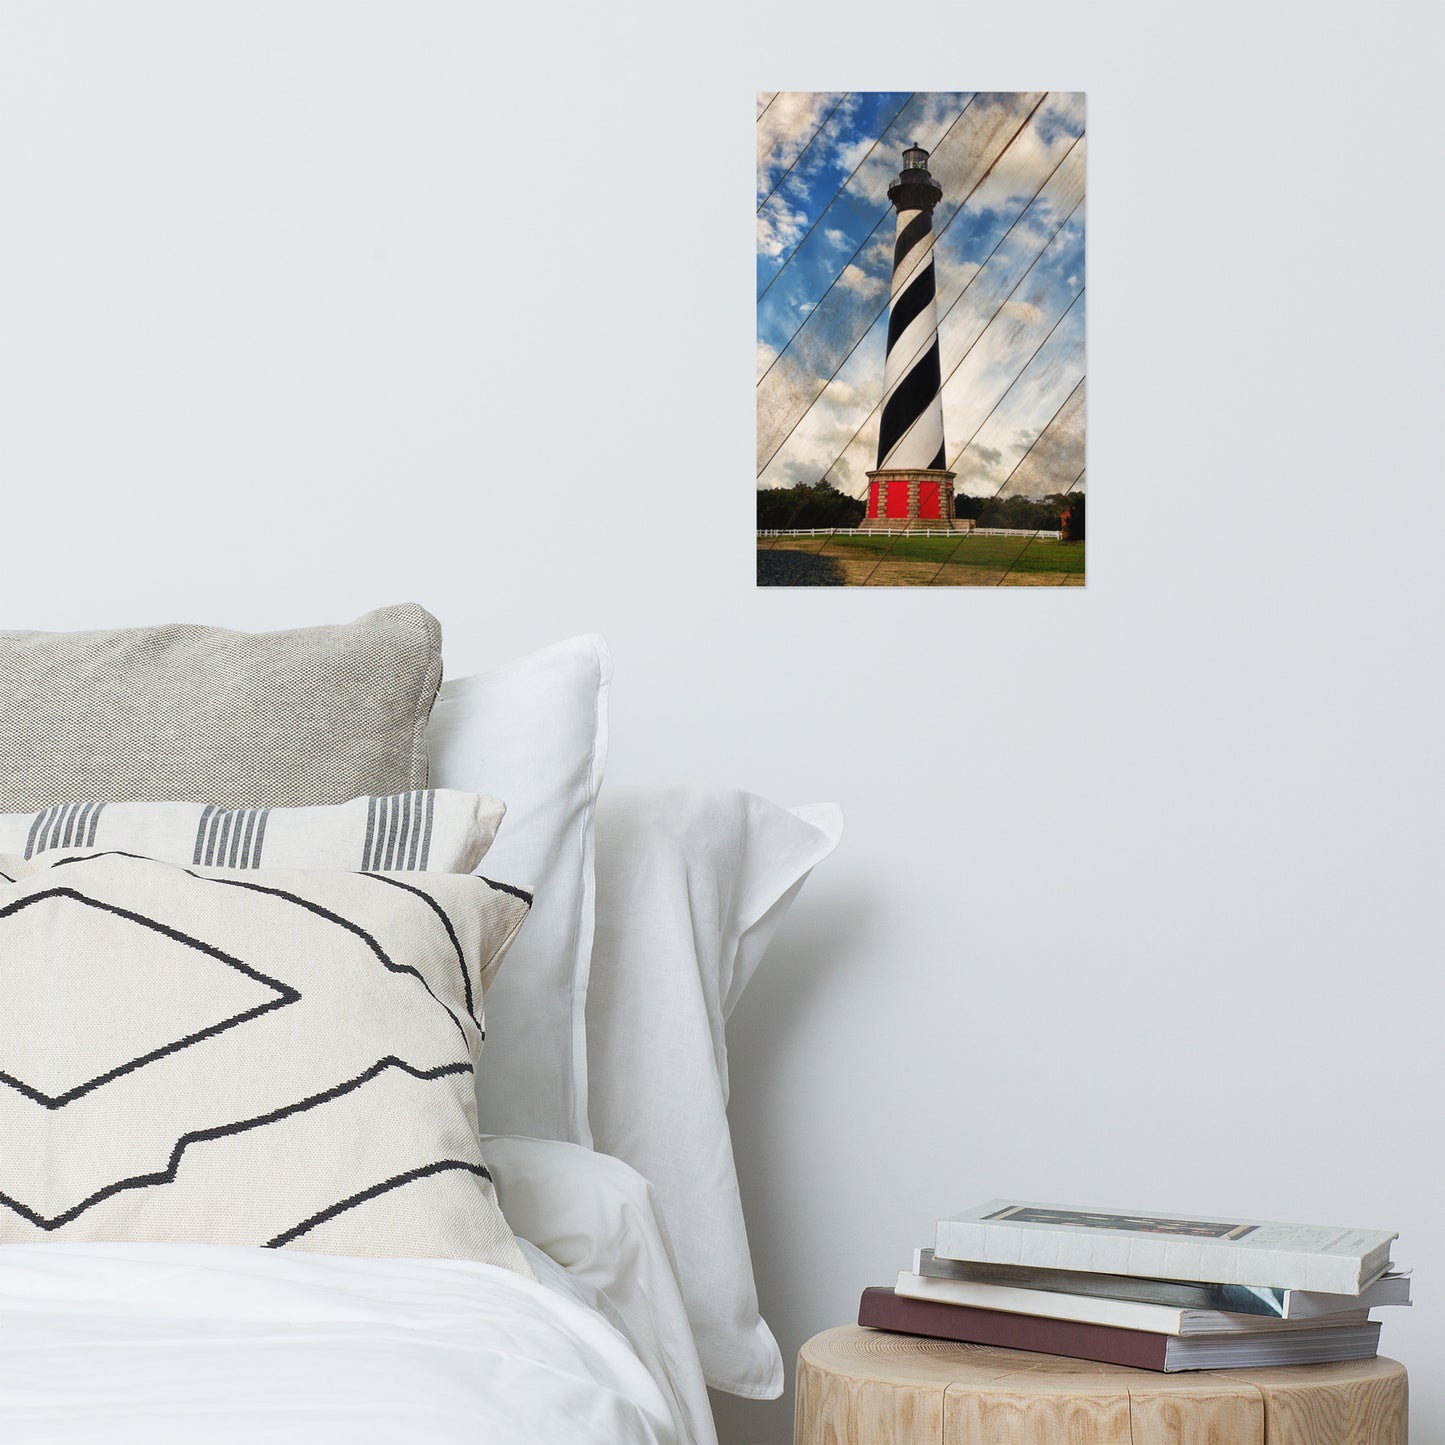 Cape Hatteras Lighthouse Landscape Photo Faux Wood Panels Loose Wall Art Print